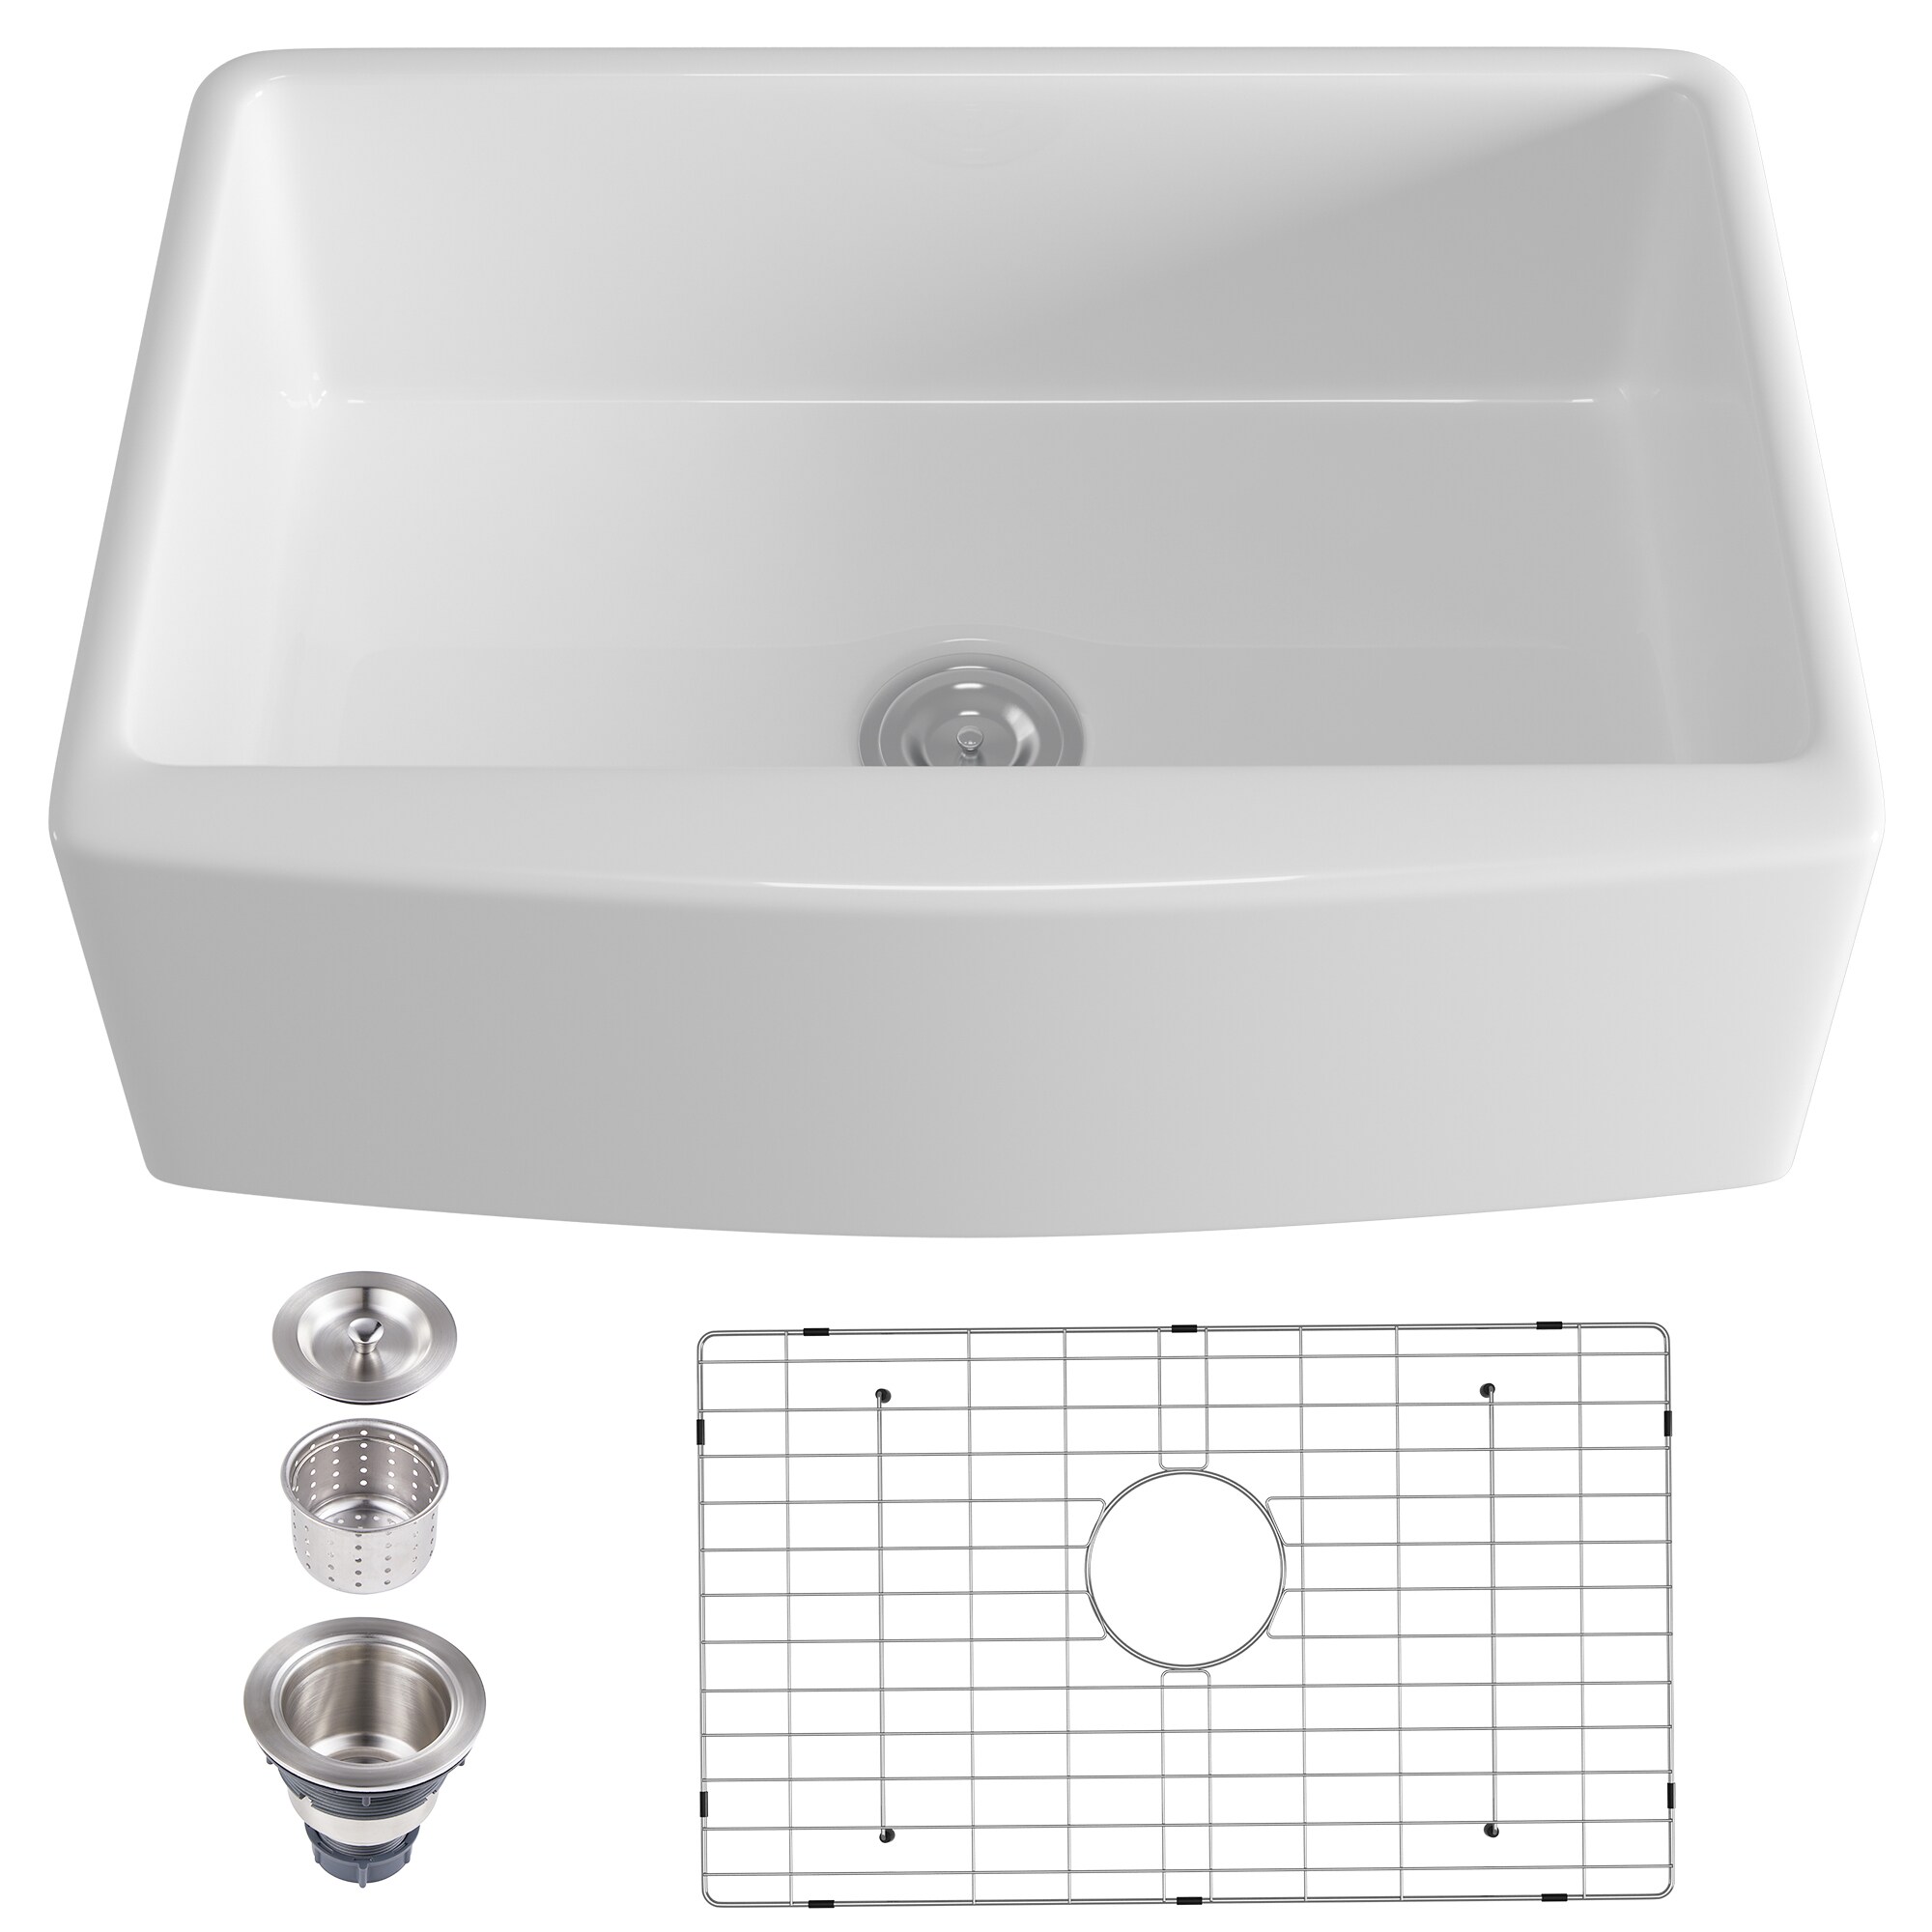 CASAINC Single bowls farmhouse kitchen sink Drop-In 29.76-in x 20.75-in  White Single Bowl Fireclay Kitchen Sink